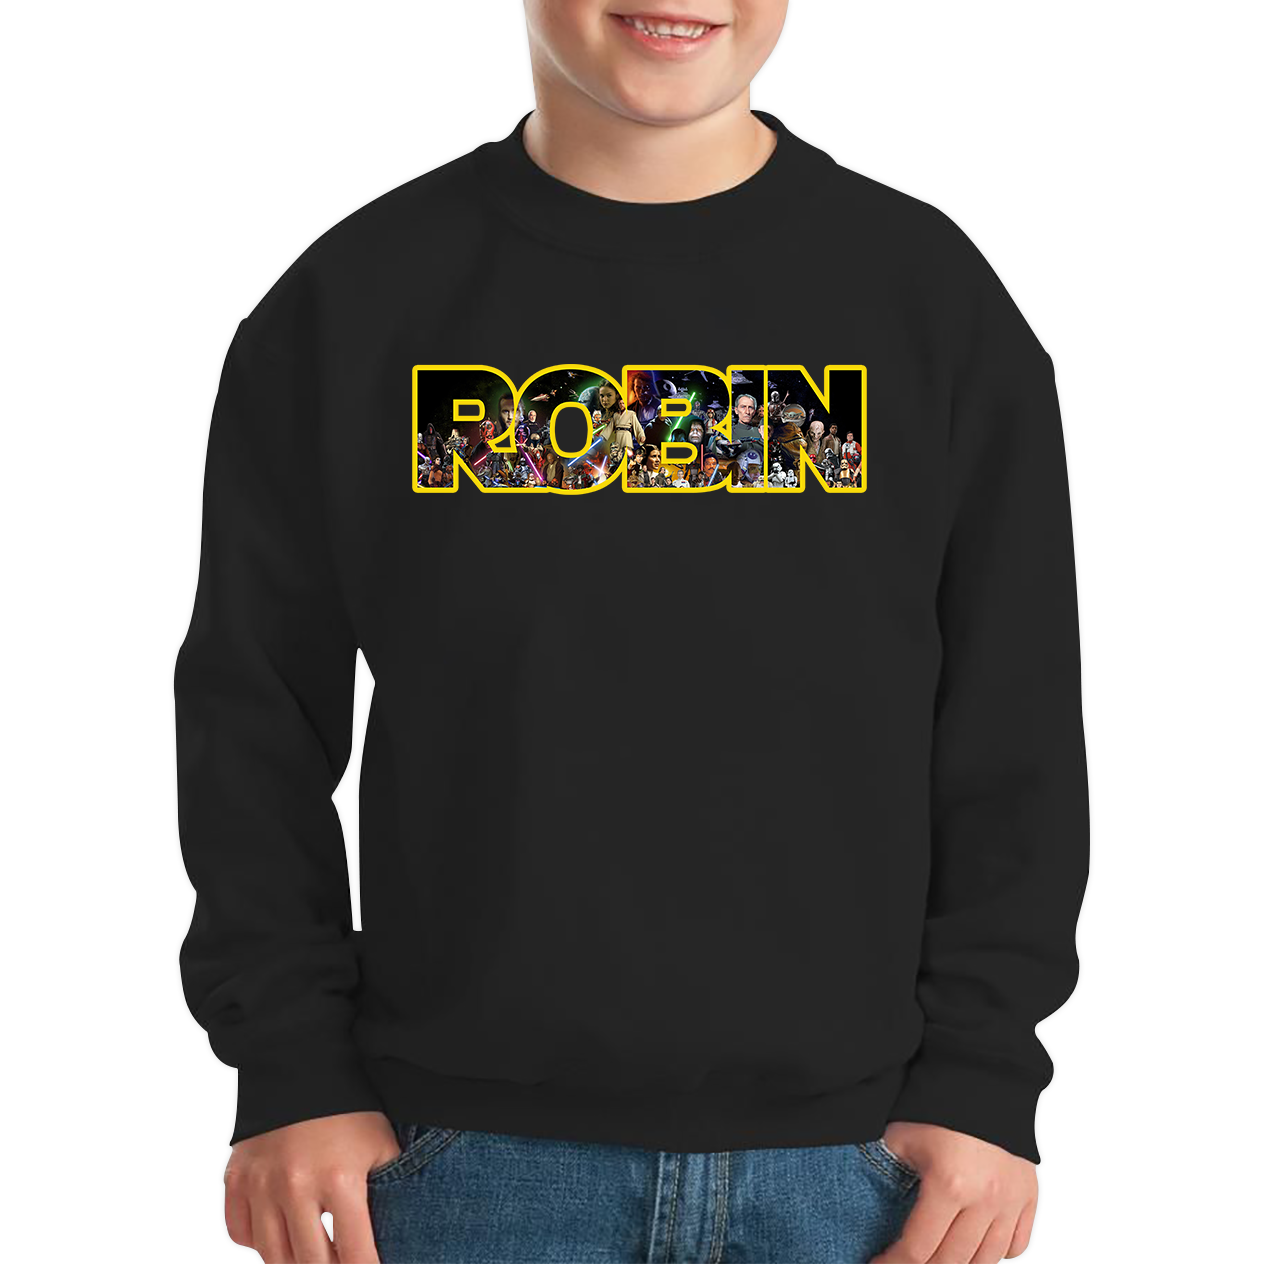 Personalised Star Wars Jumper Your Name Or Custom Text Here Kids Sweatshirt